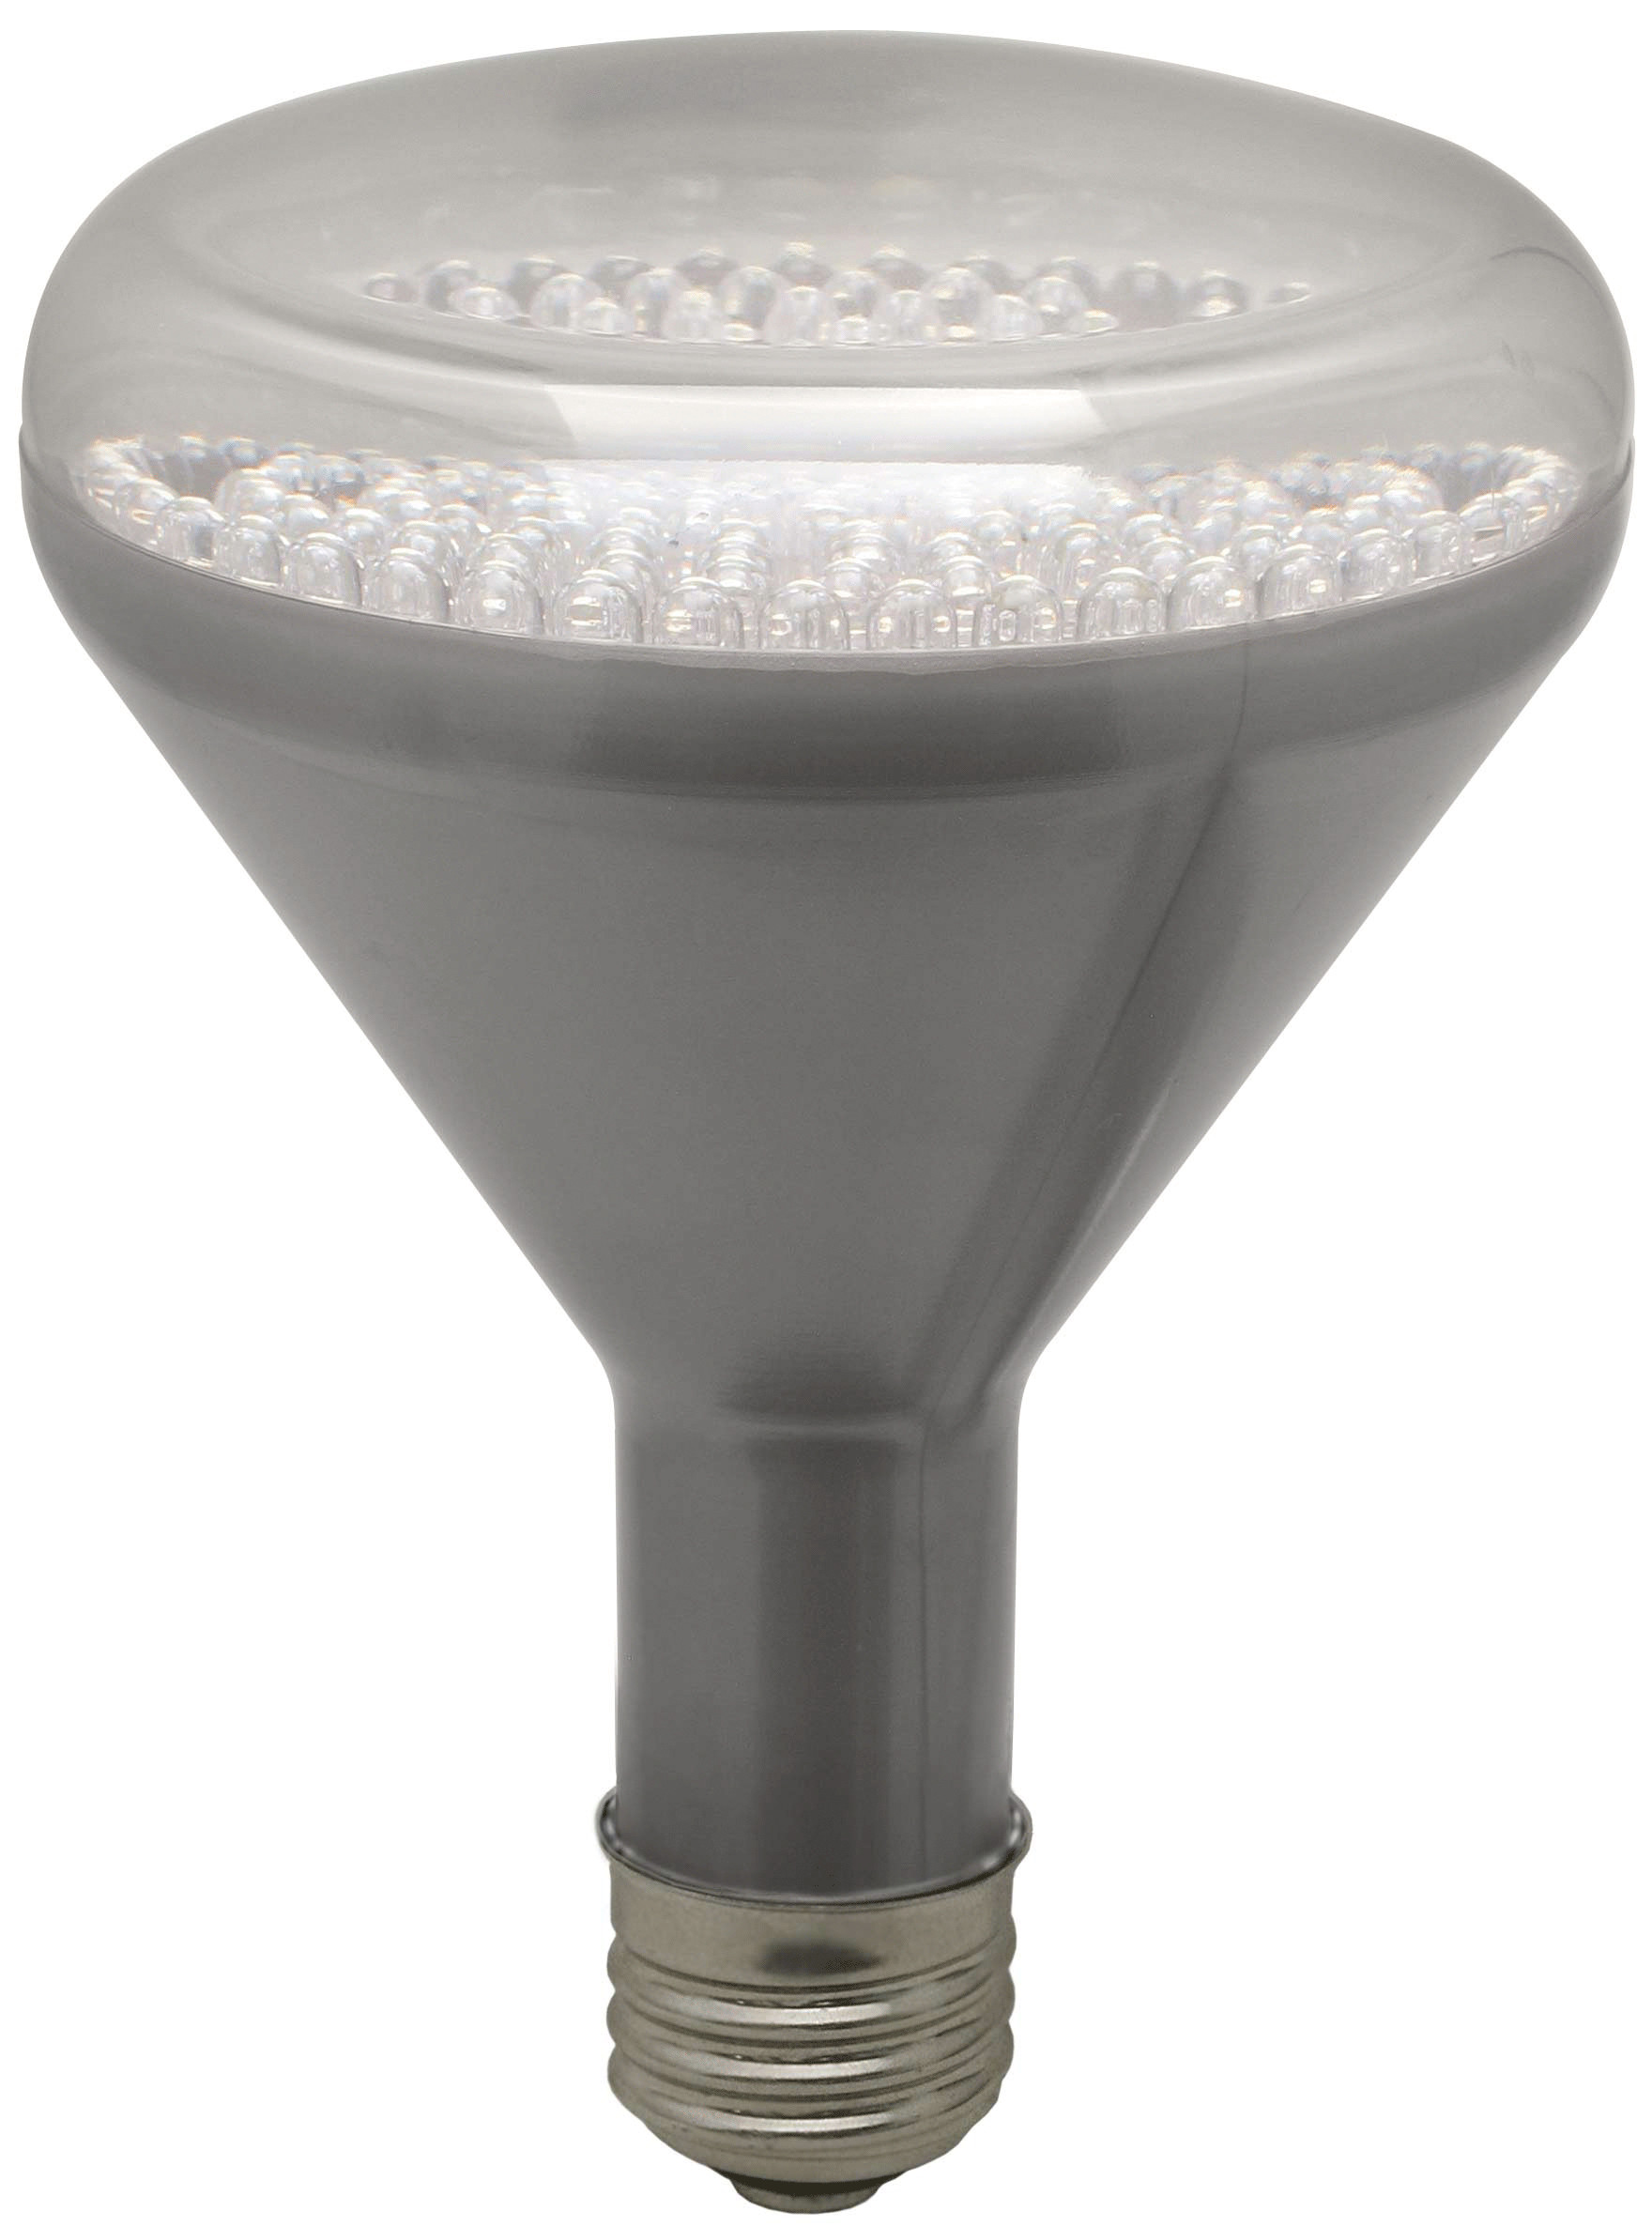 Best ideas about Led Outdoor Flood Light Bulbs
. Save or Pin Led Bulbs For Outdoor Flood Lights – Shelly Lighting Now.